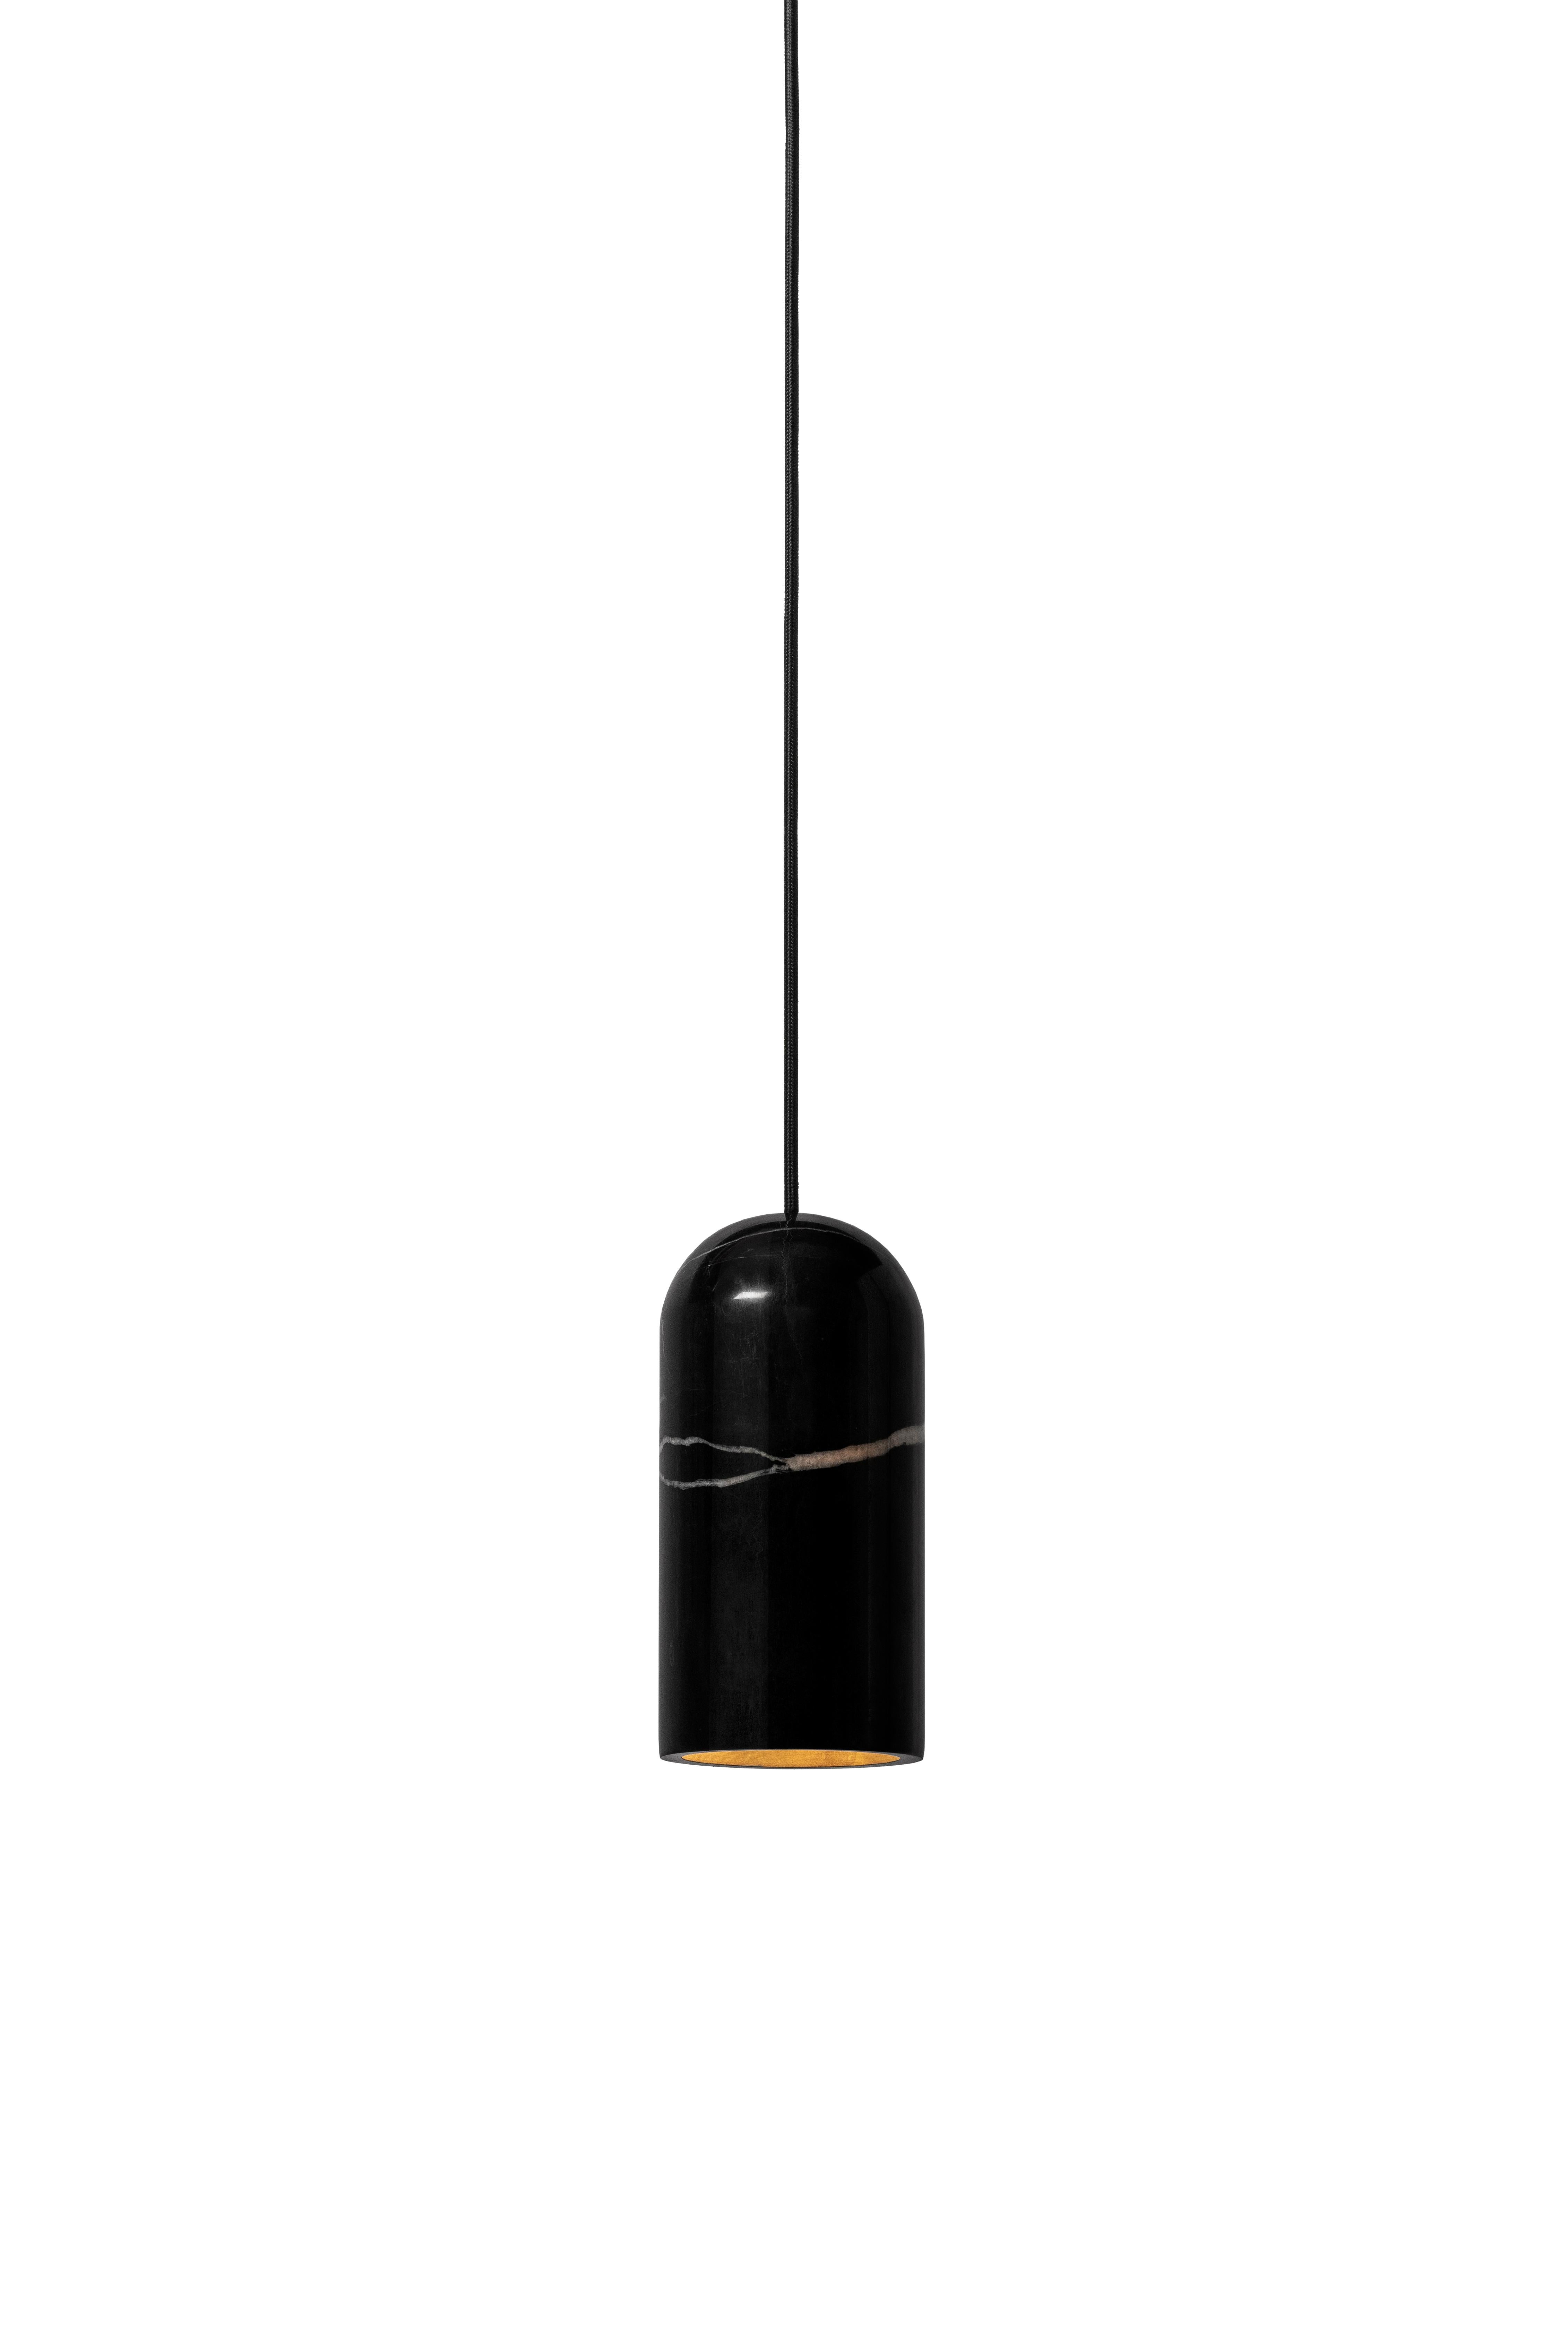 Pendant lamp 'U2' by Buzao x Bentu design.
Black marble

23 cm high, 11 cm diameter
Wire: 2 meters black (adjustable)
Lamp type: E27 LED 3W 100-240V 80Ra 200LM 2700K - Comptable with US electric system.
Ceiling rose: 6.5cm diameter